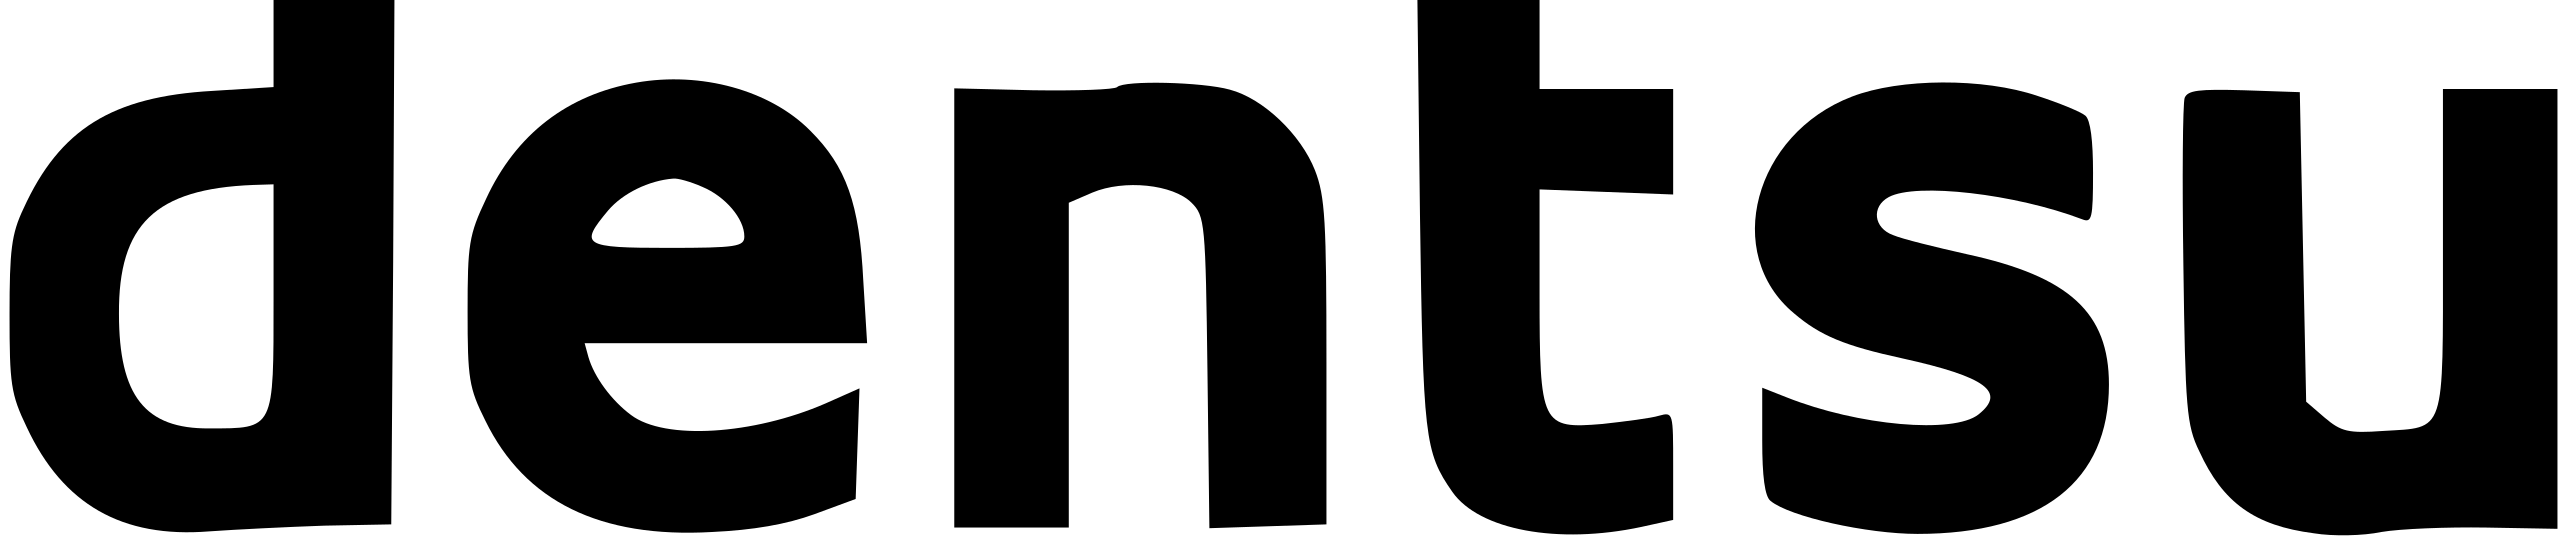 File:Dentsu-logo black.svg - Wikimedia Commons